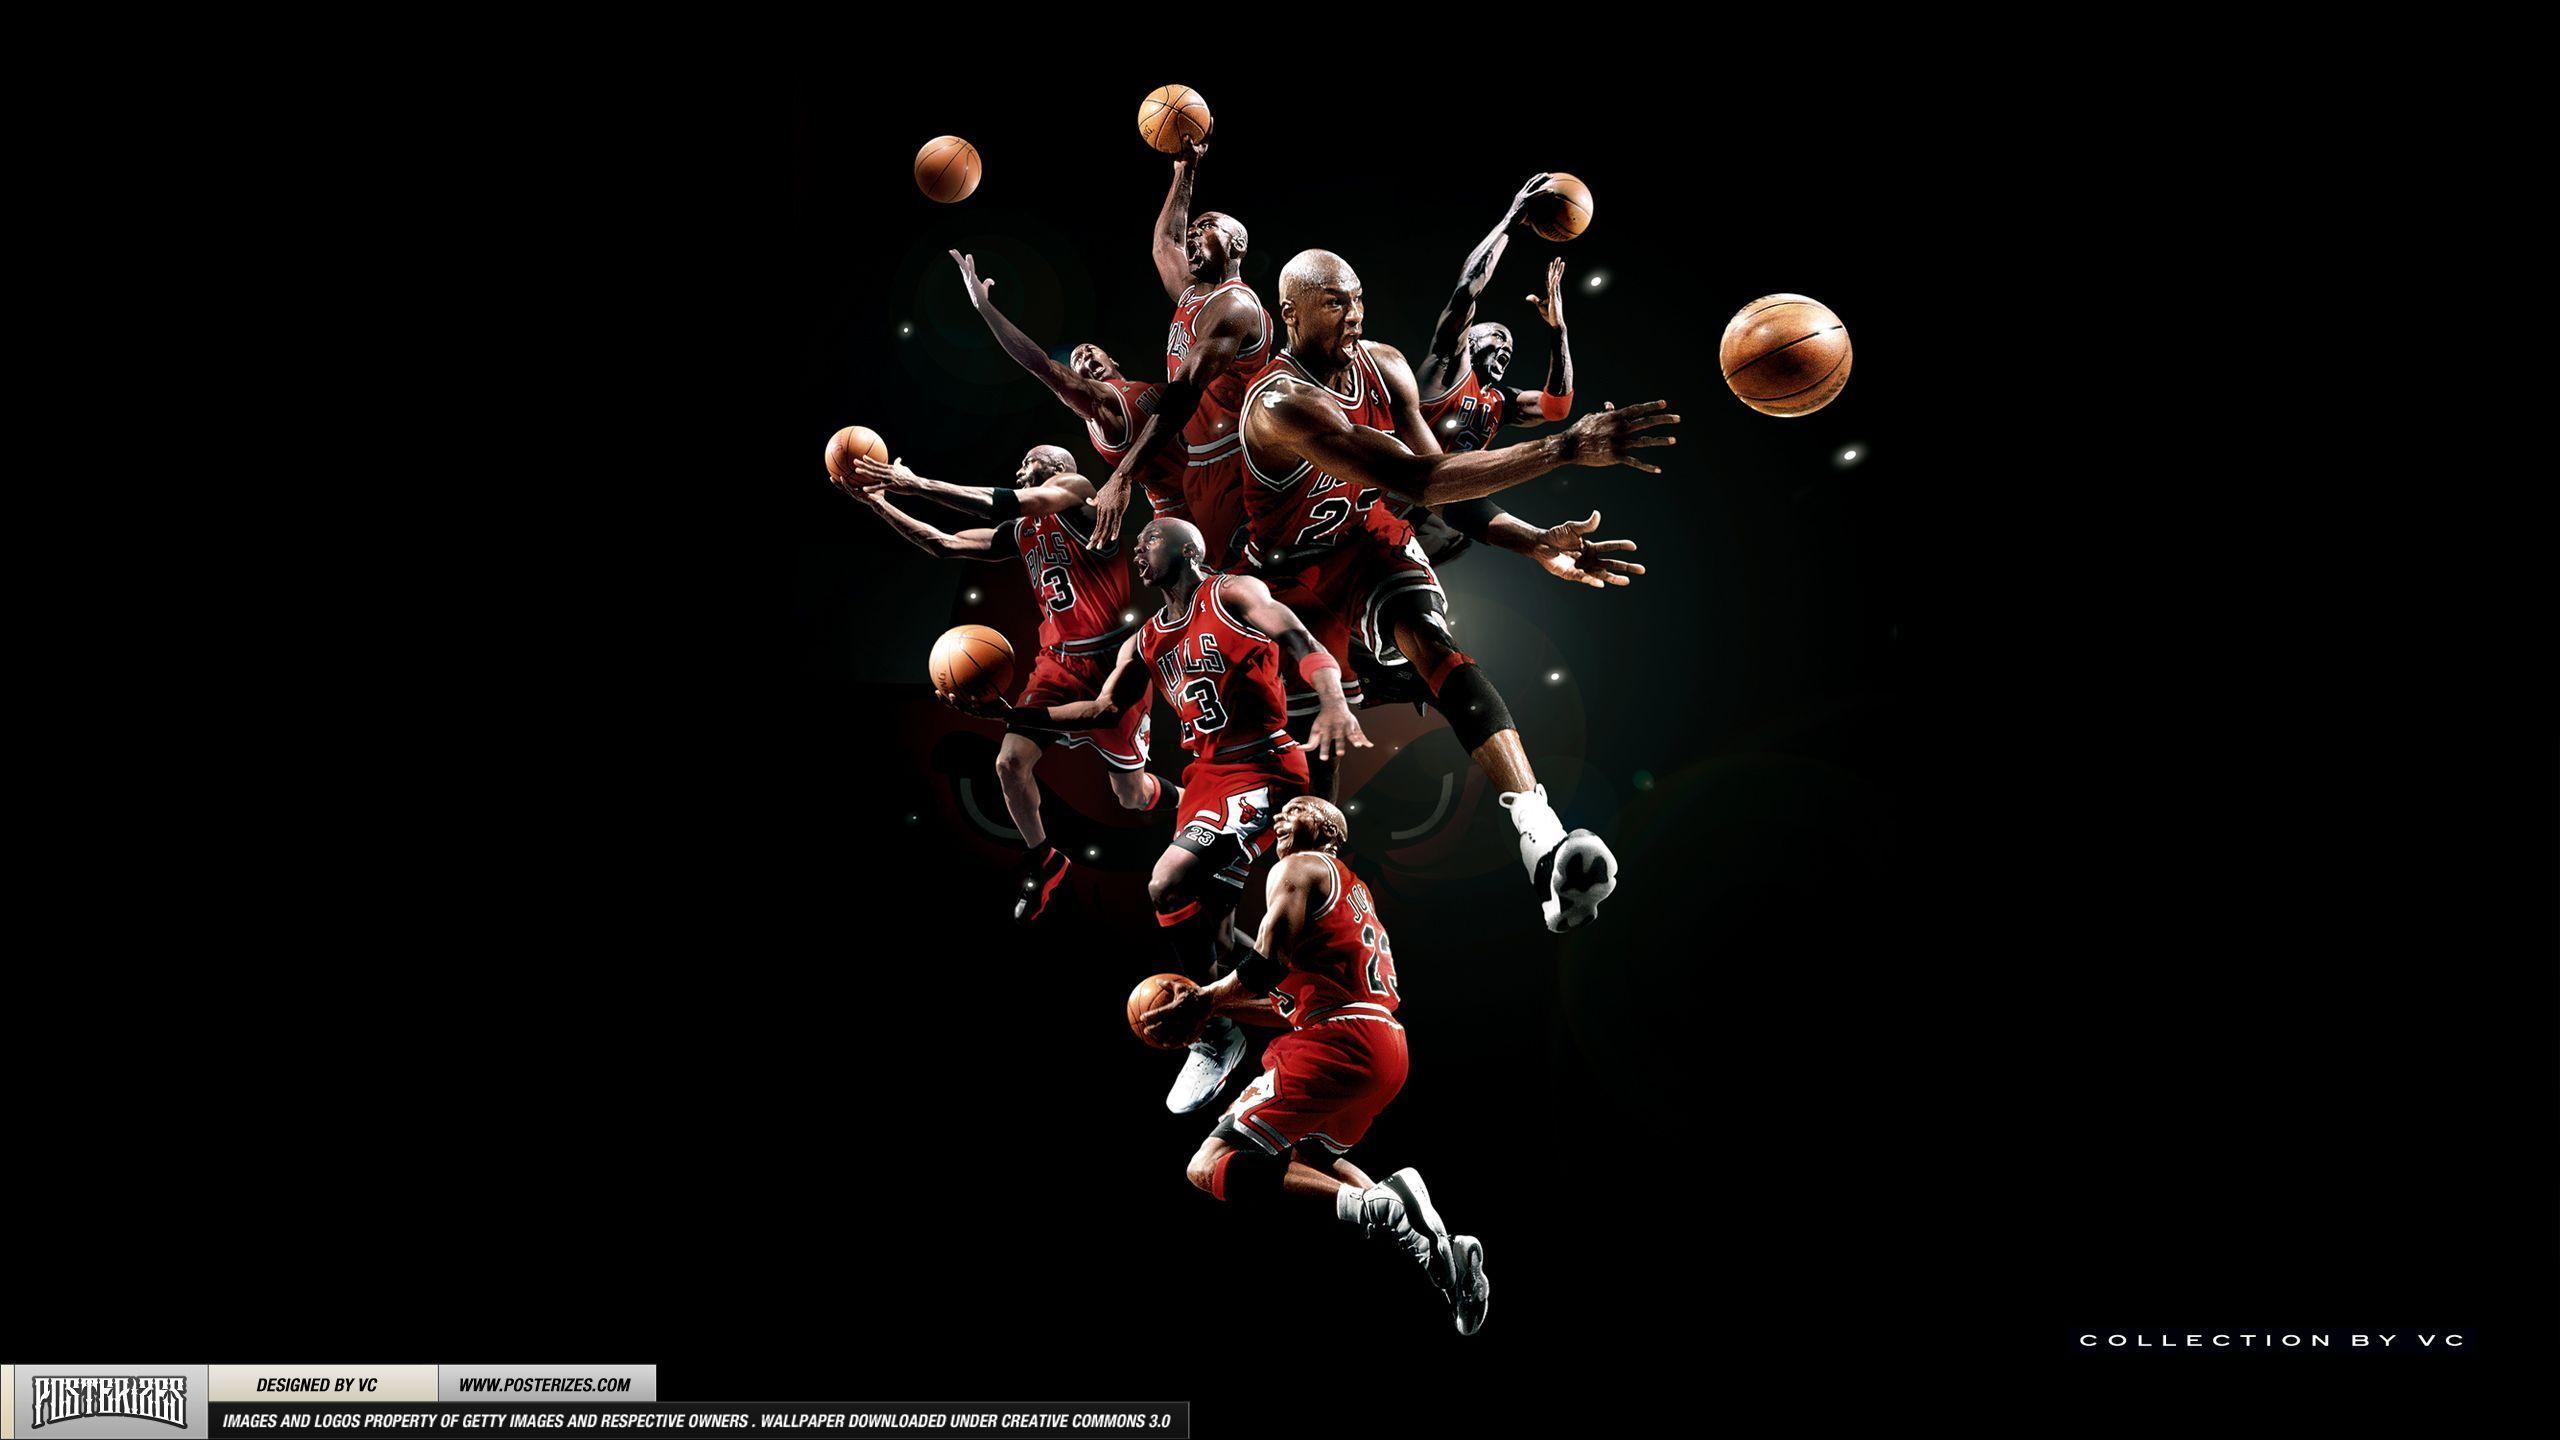 HD Awesome Michael Jordan Basketball Wallpaper HD Desktop